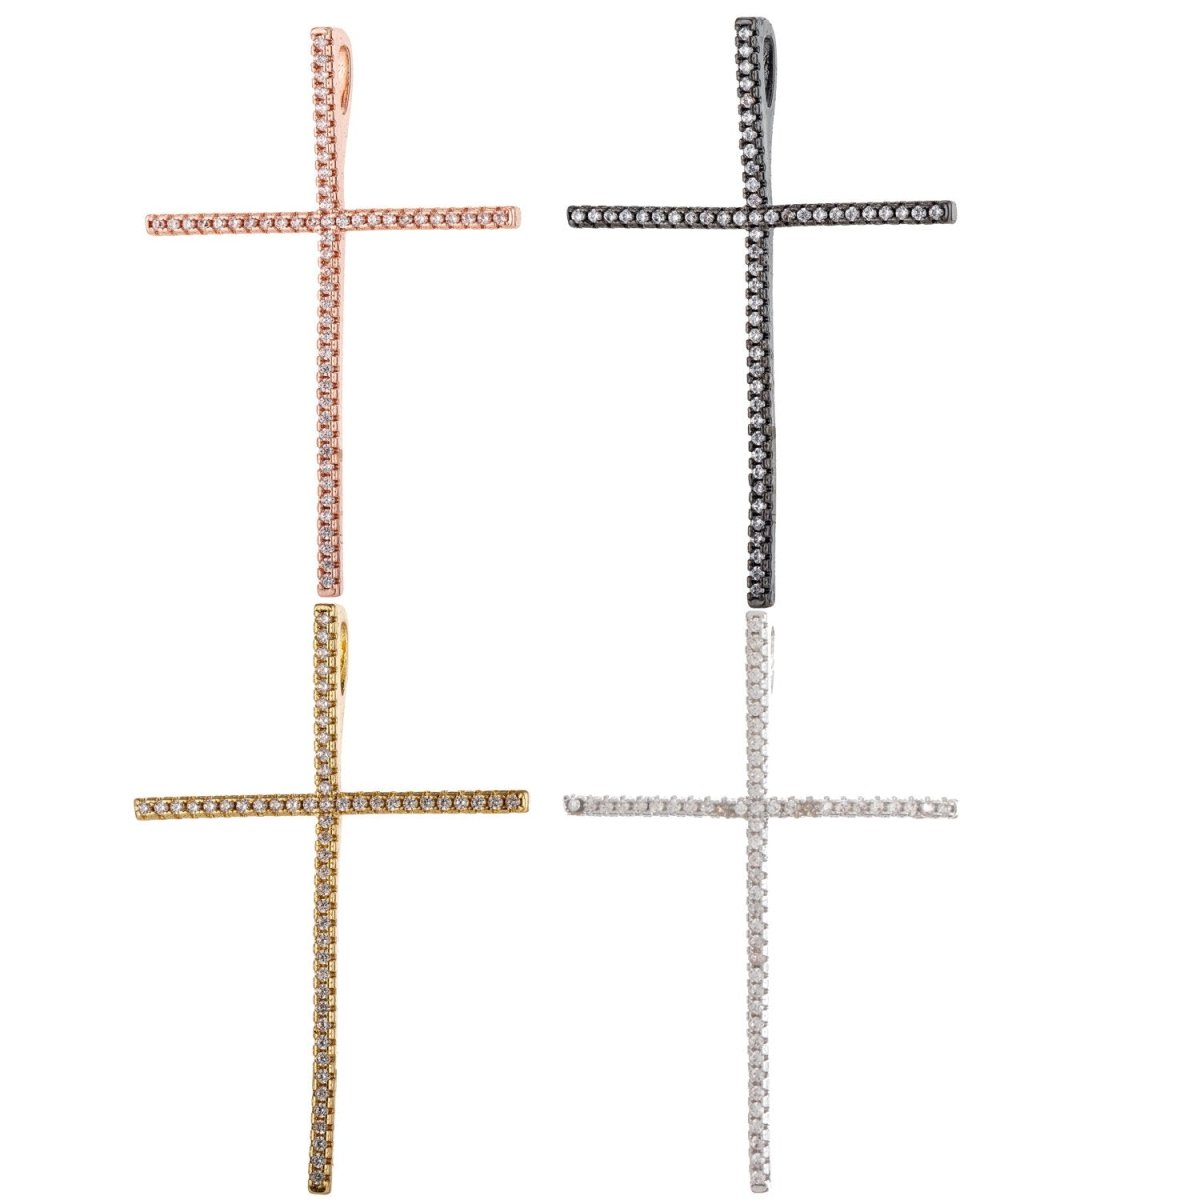 Gold Filled / Rose Gold / Silver / Black Cross CZ Charm Pendant, Micro Pave CZ Cross Charms Cubic Zirconia Cross Pendants Cross Necklace Jewelry, C-227 - DLUXCA